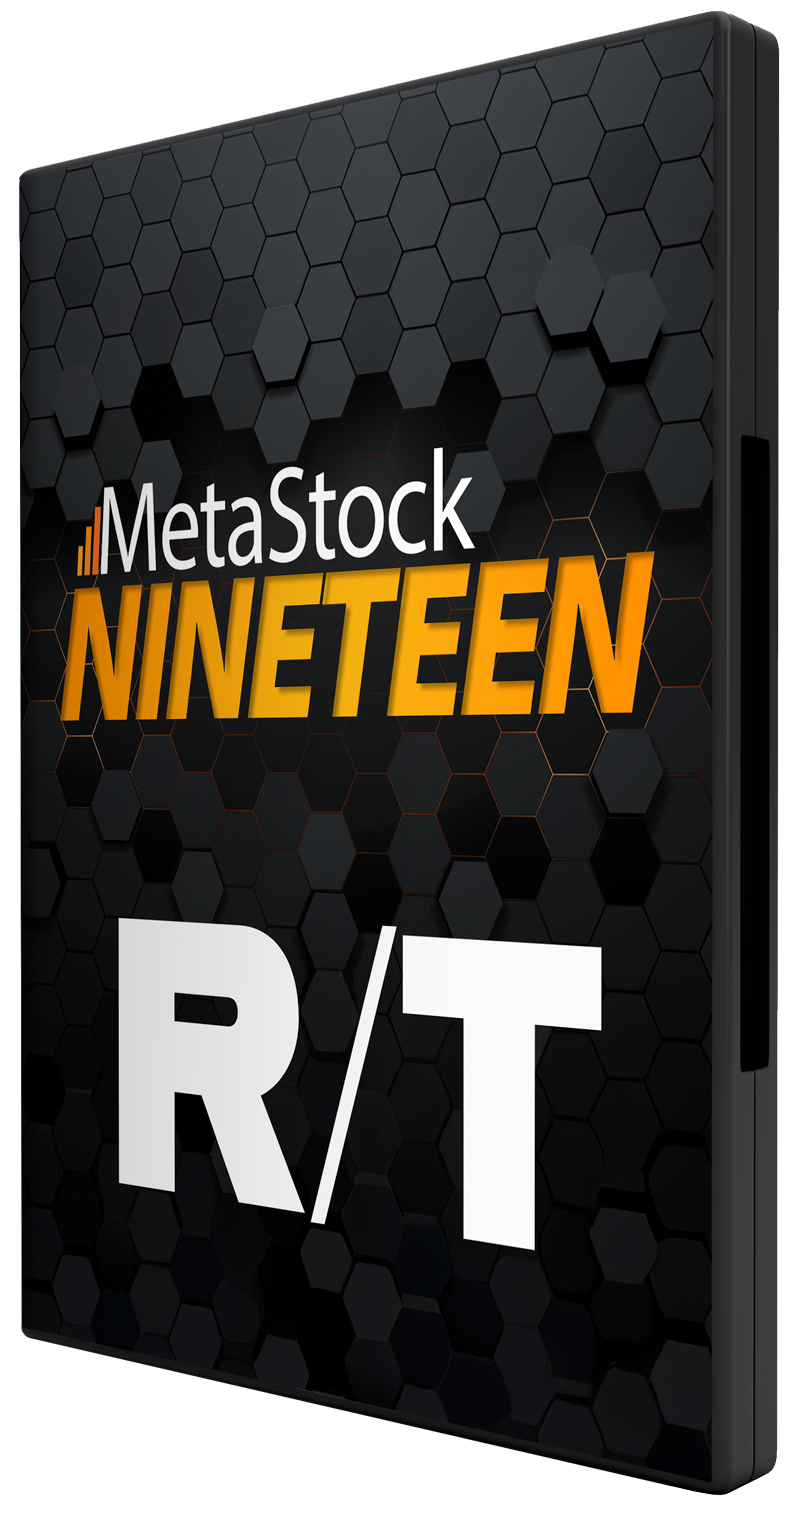 Metastock 19 RT